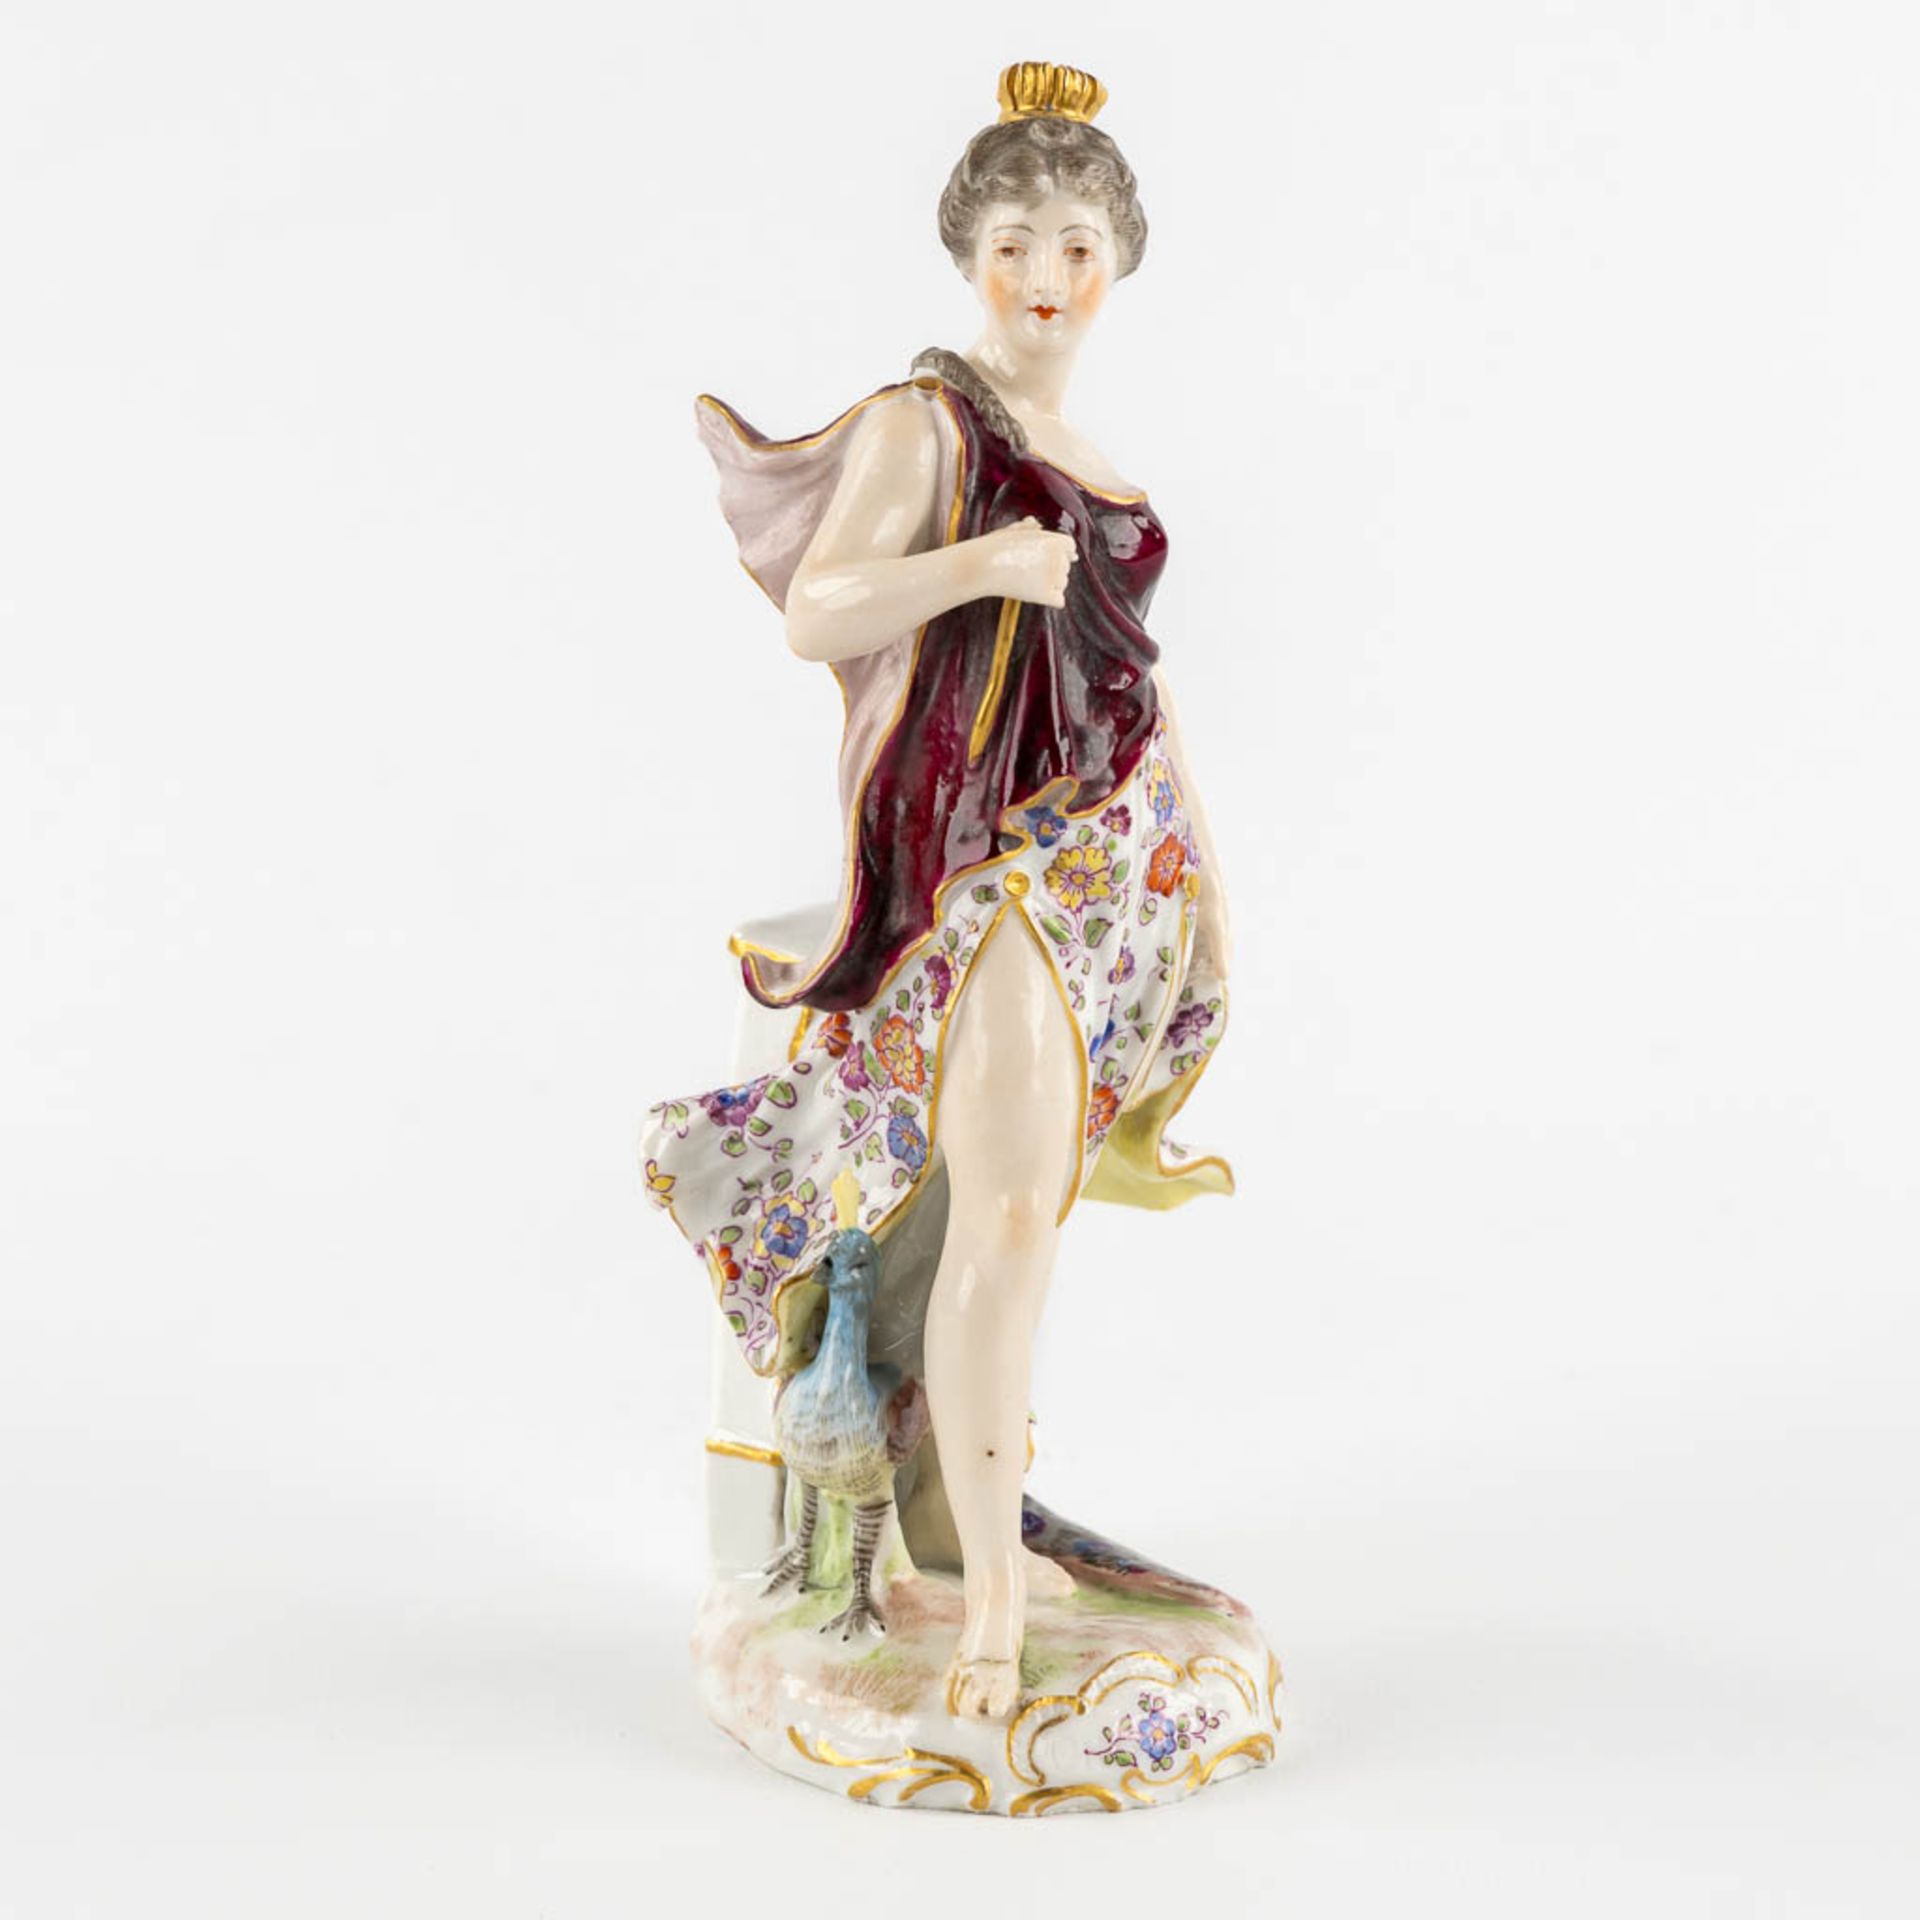 Eugène Claus, Lady with a peacock 'Orgeuil - Pride', polychrome porcelain. 19th C. (L:9 x W:8,5 x H: